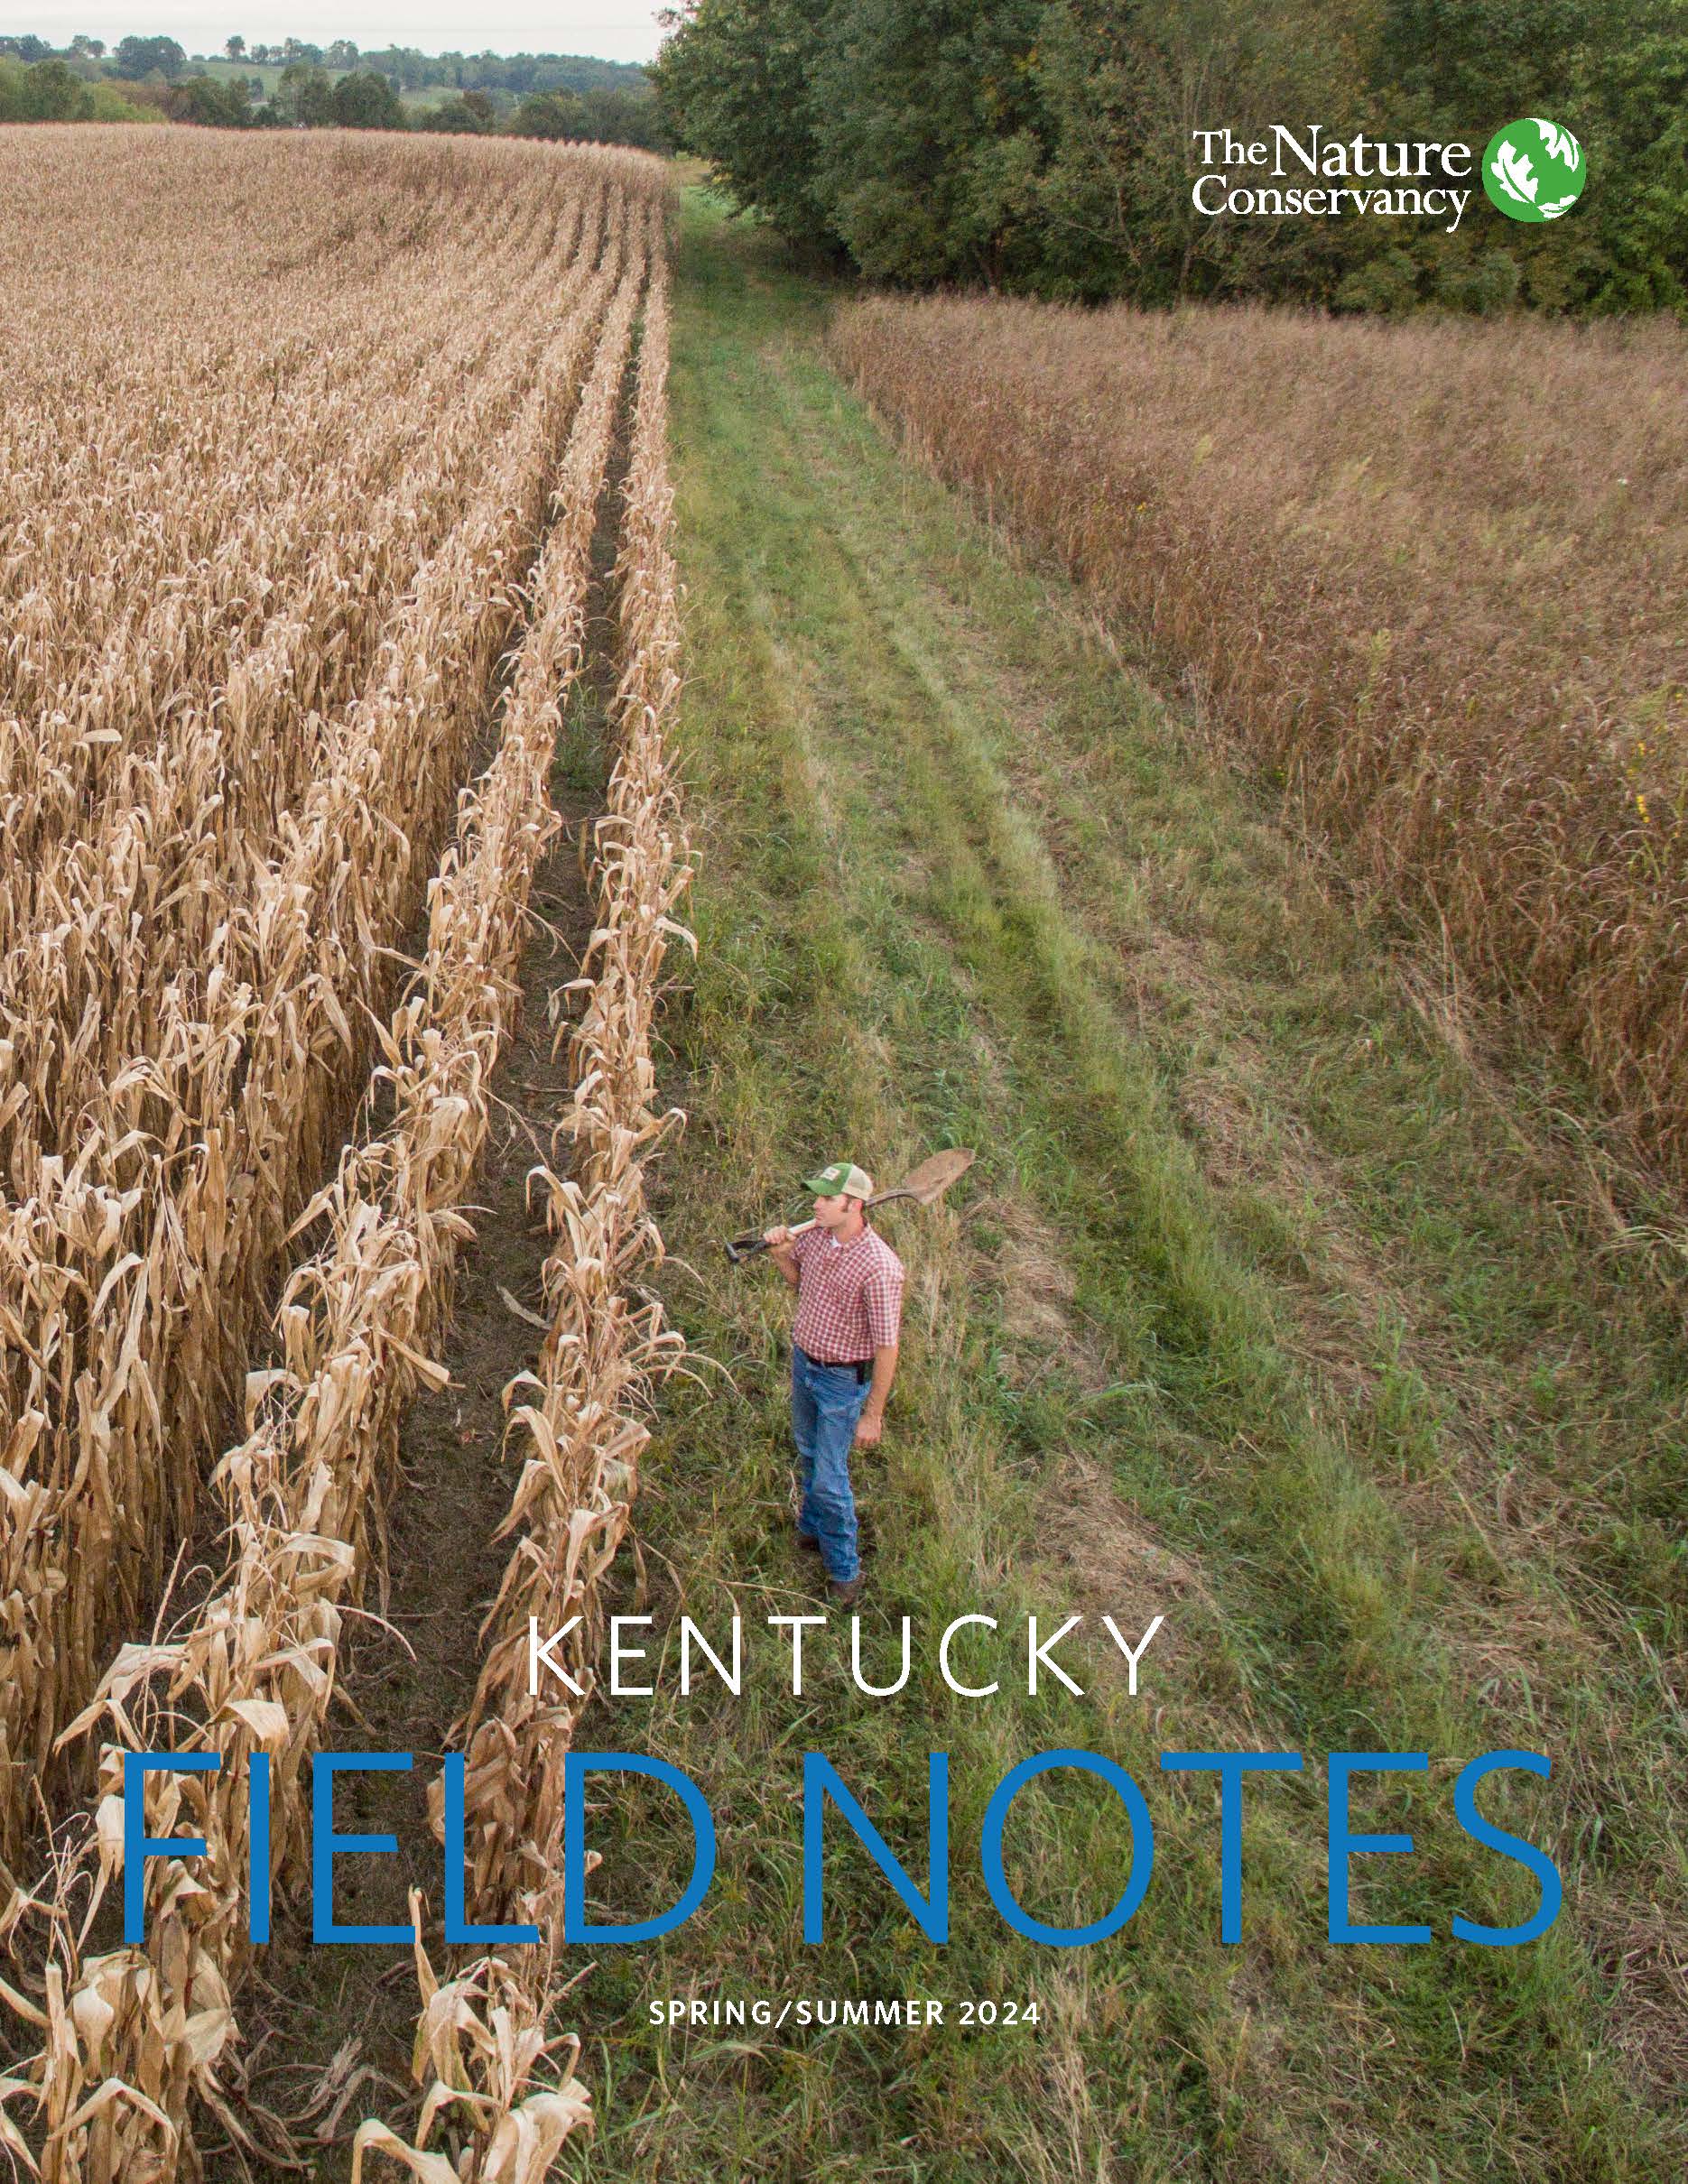 A farmer stands in his Kentucky field.